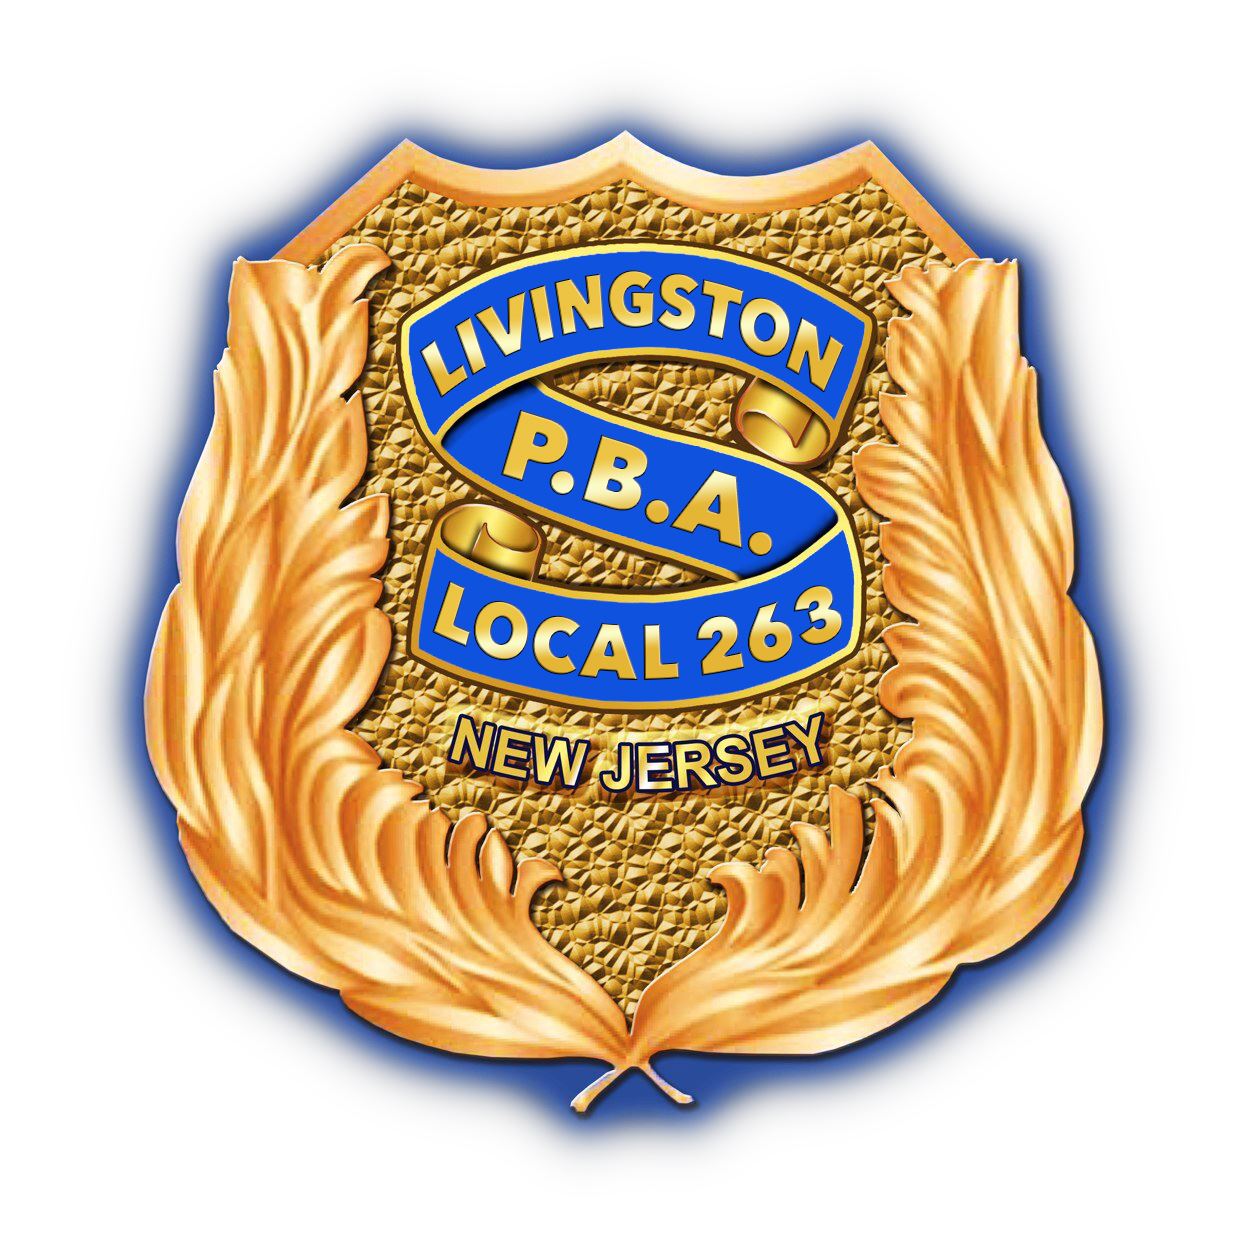 Livingston P.B.A. Local 263